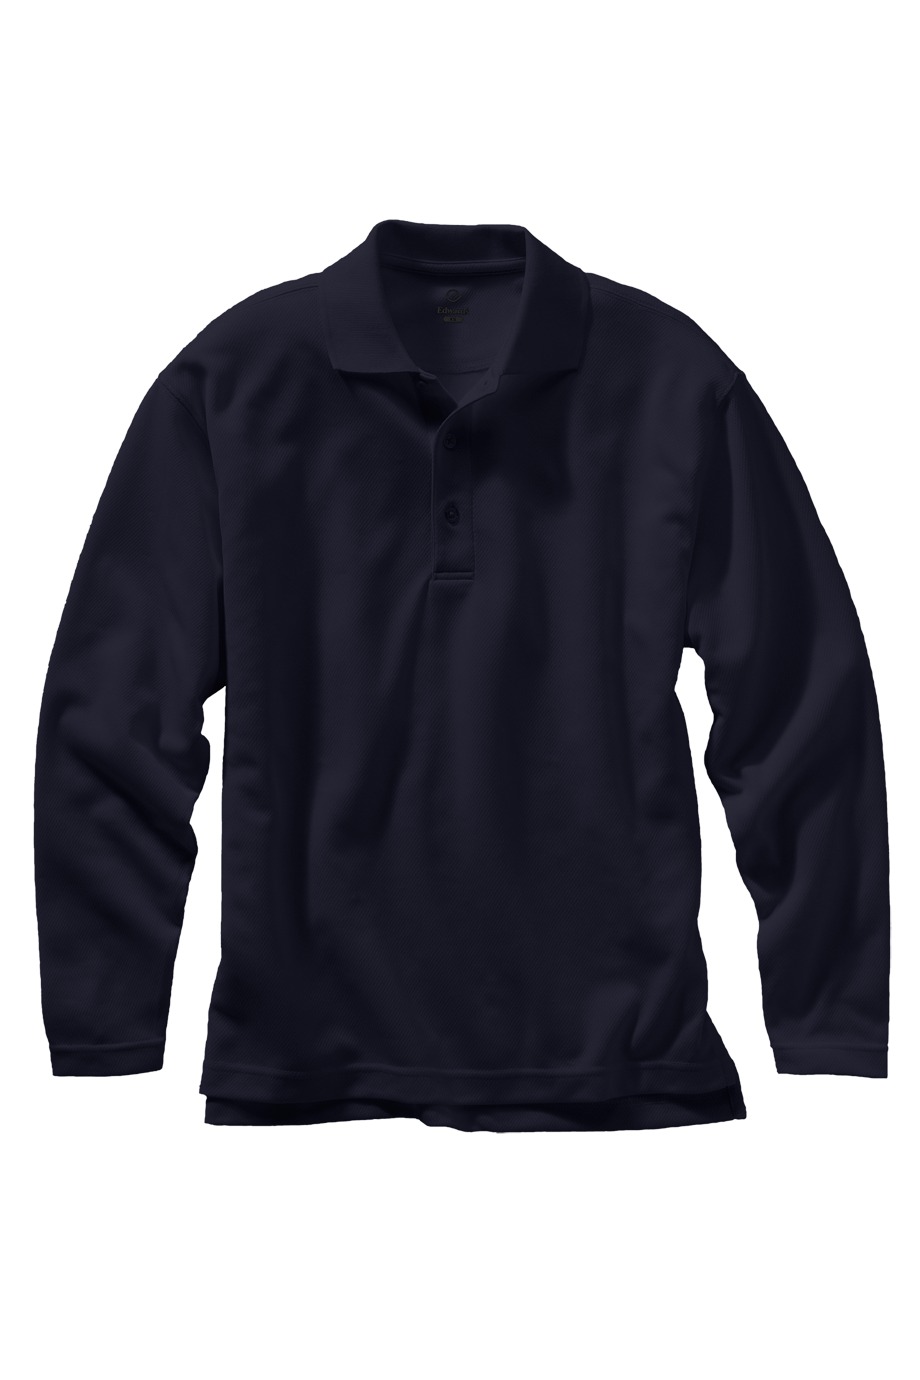 Edwards Garment 1578 - Dry-Mesh Long Sleeve Polo